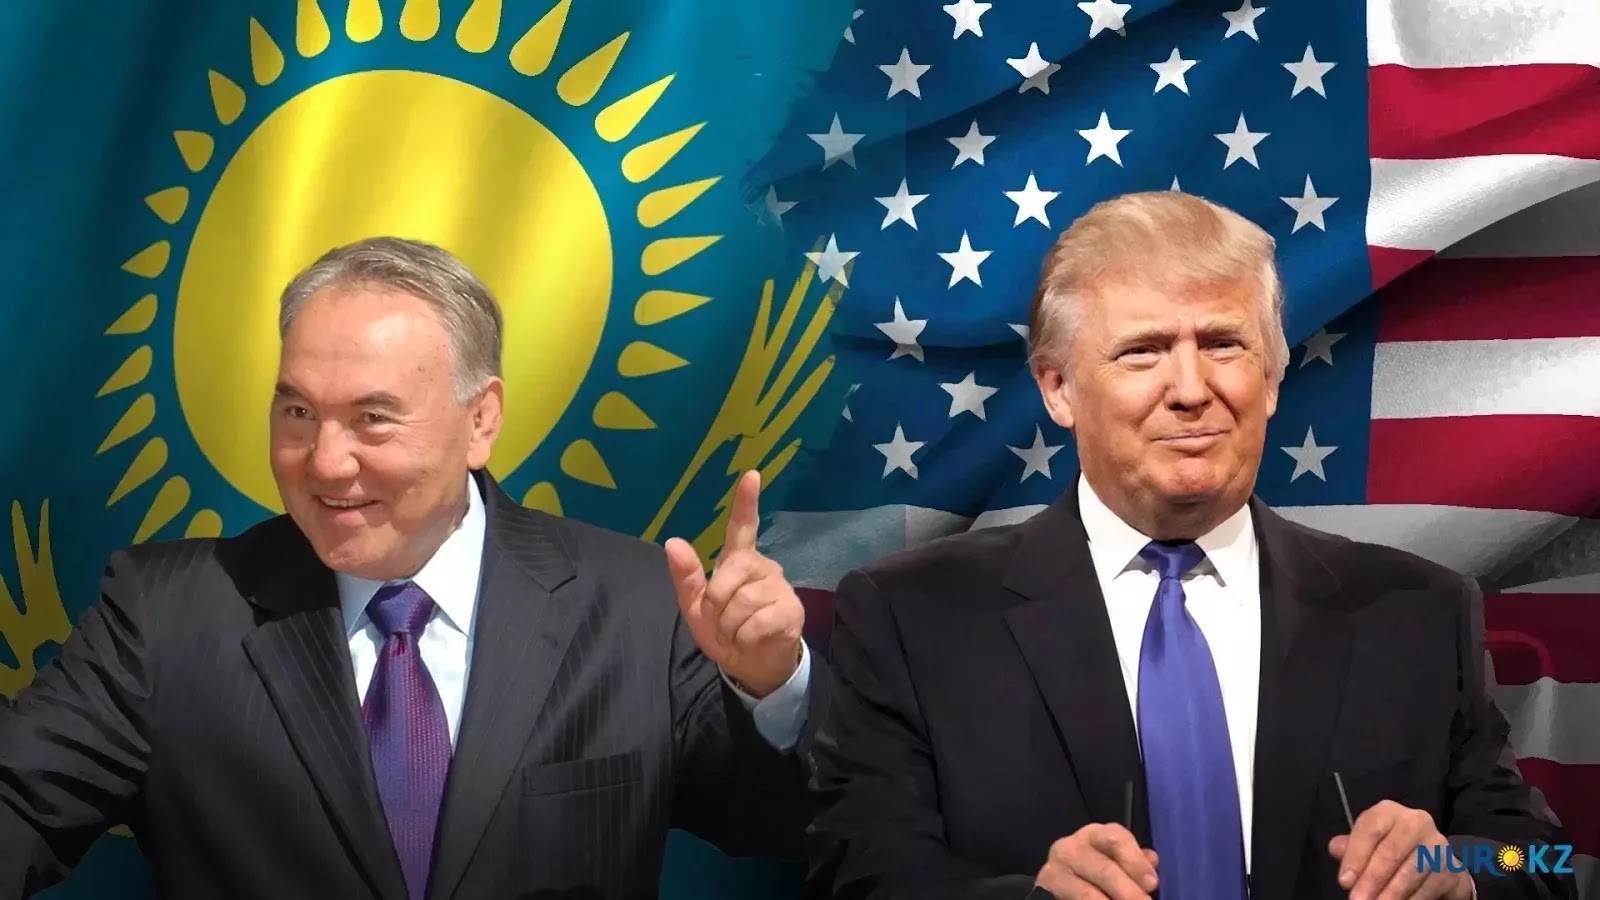 Многовекторная политика. Назарбаев и Трамп. Нурсултан Назарбаев и Трамп. Трамп с казахским флагом. Встреча Трампа и Назарбаева.